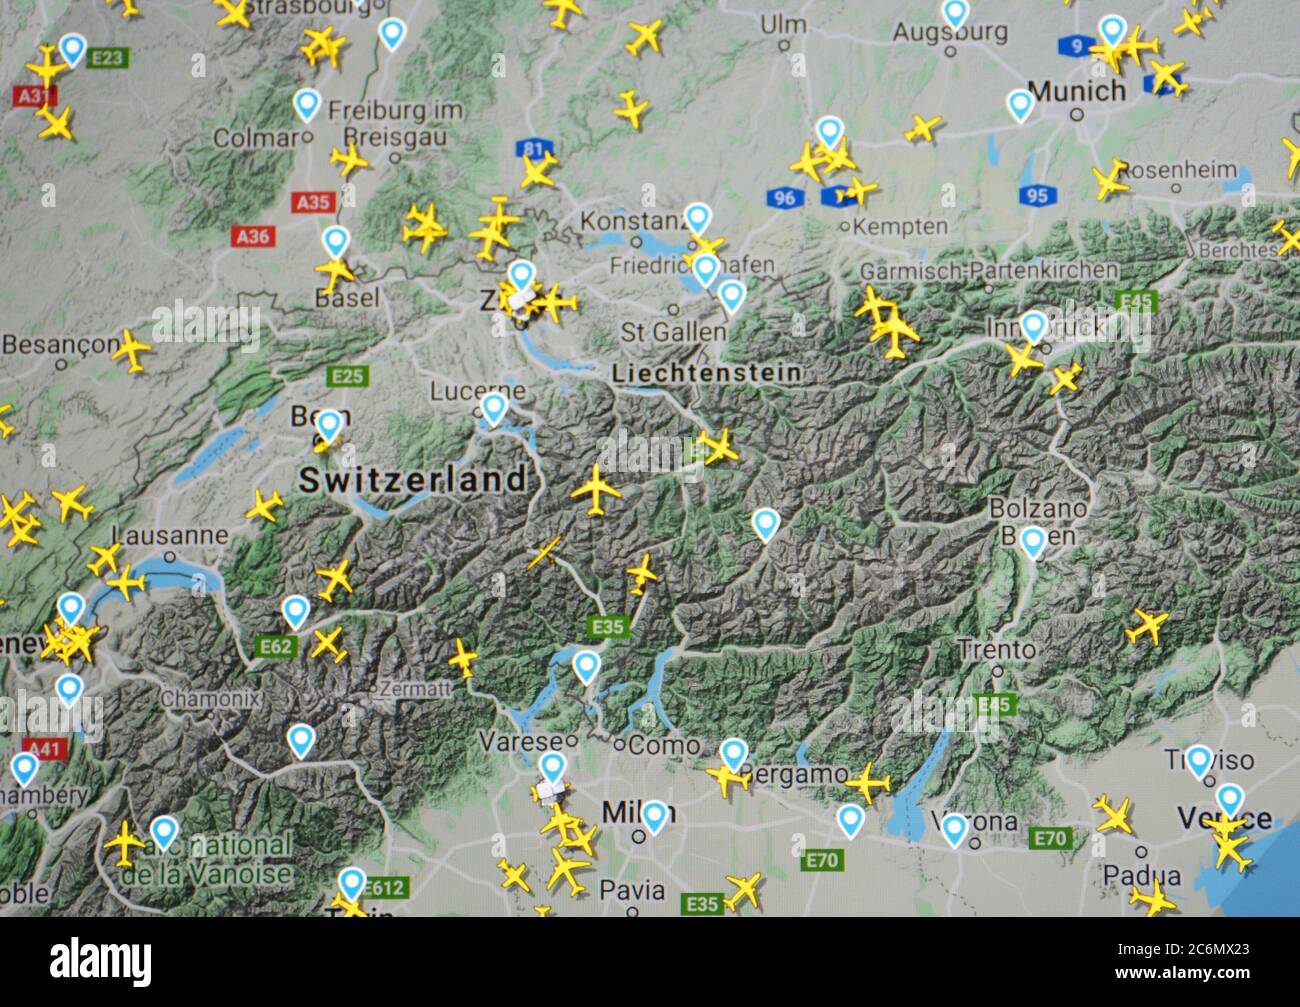 air traffic over Switzerland, Italy, Germany, France, Austria (10 july 2020, UTC 19.35)  on Internet with Flightradar 24 site. Coronavirus peirod Stock Photo